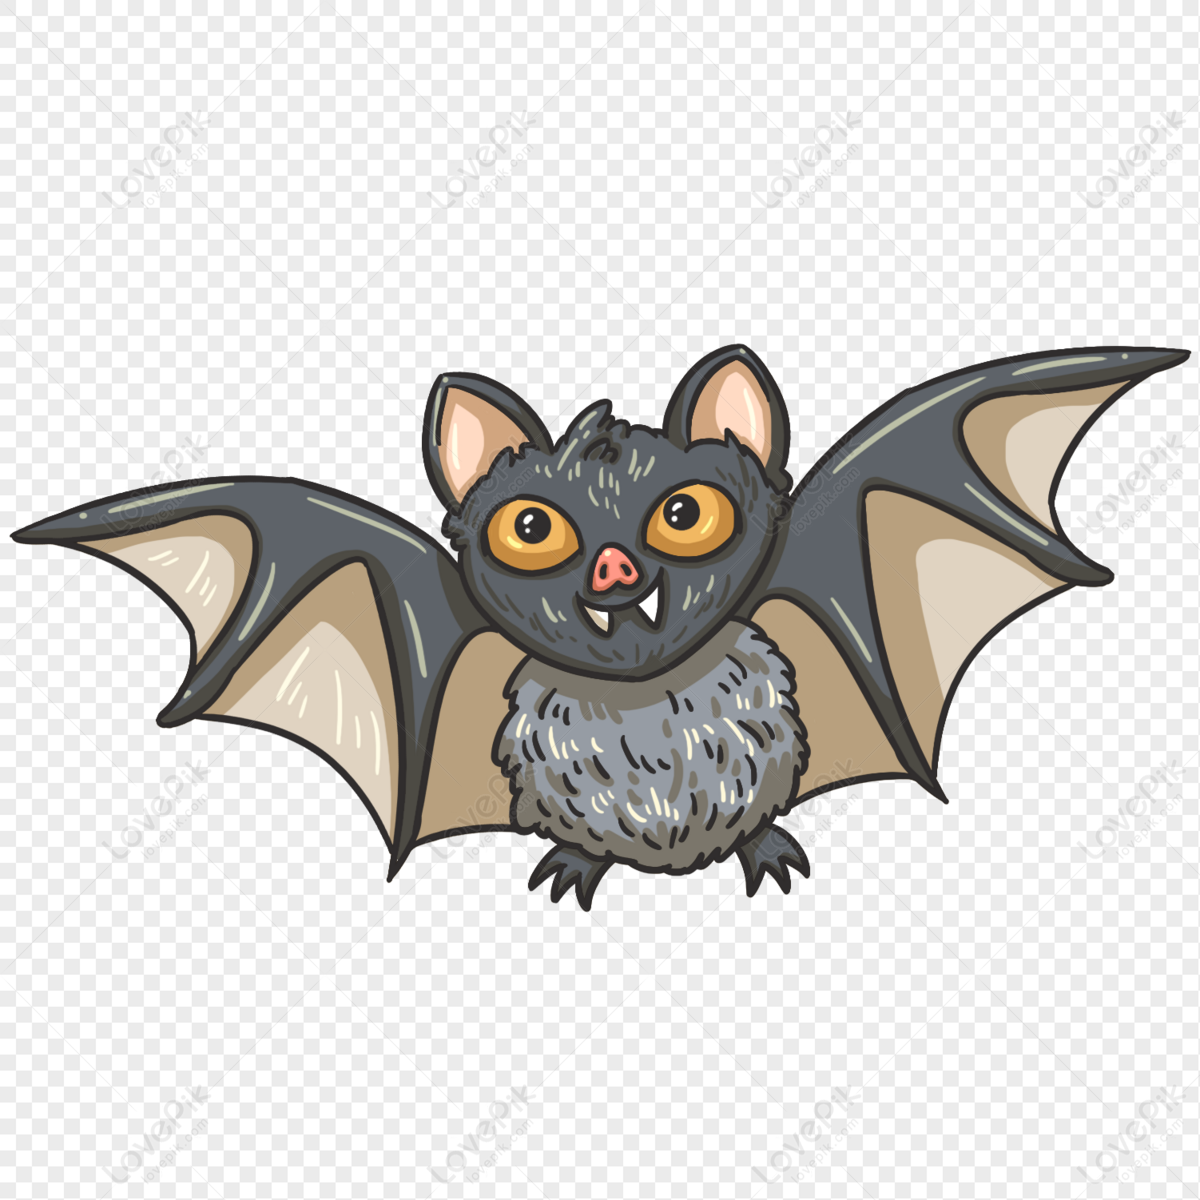 Desenho de morcego halloween PNG - Bat halloween PNG FREE!